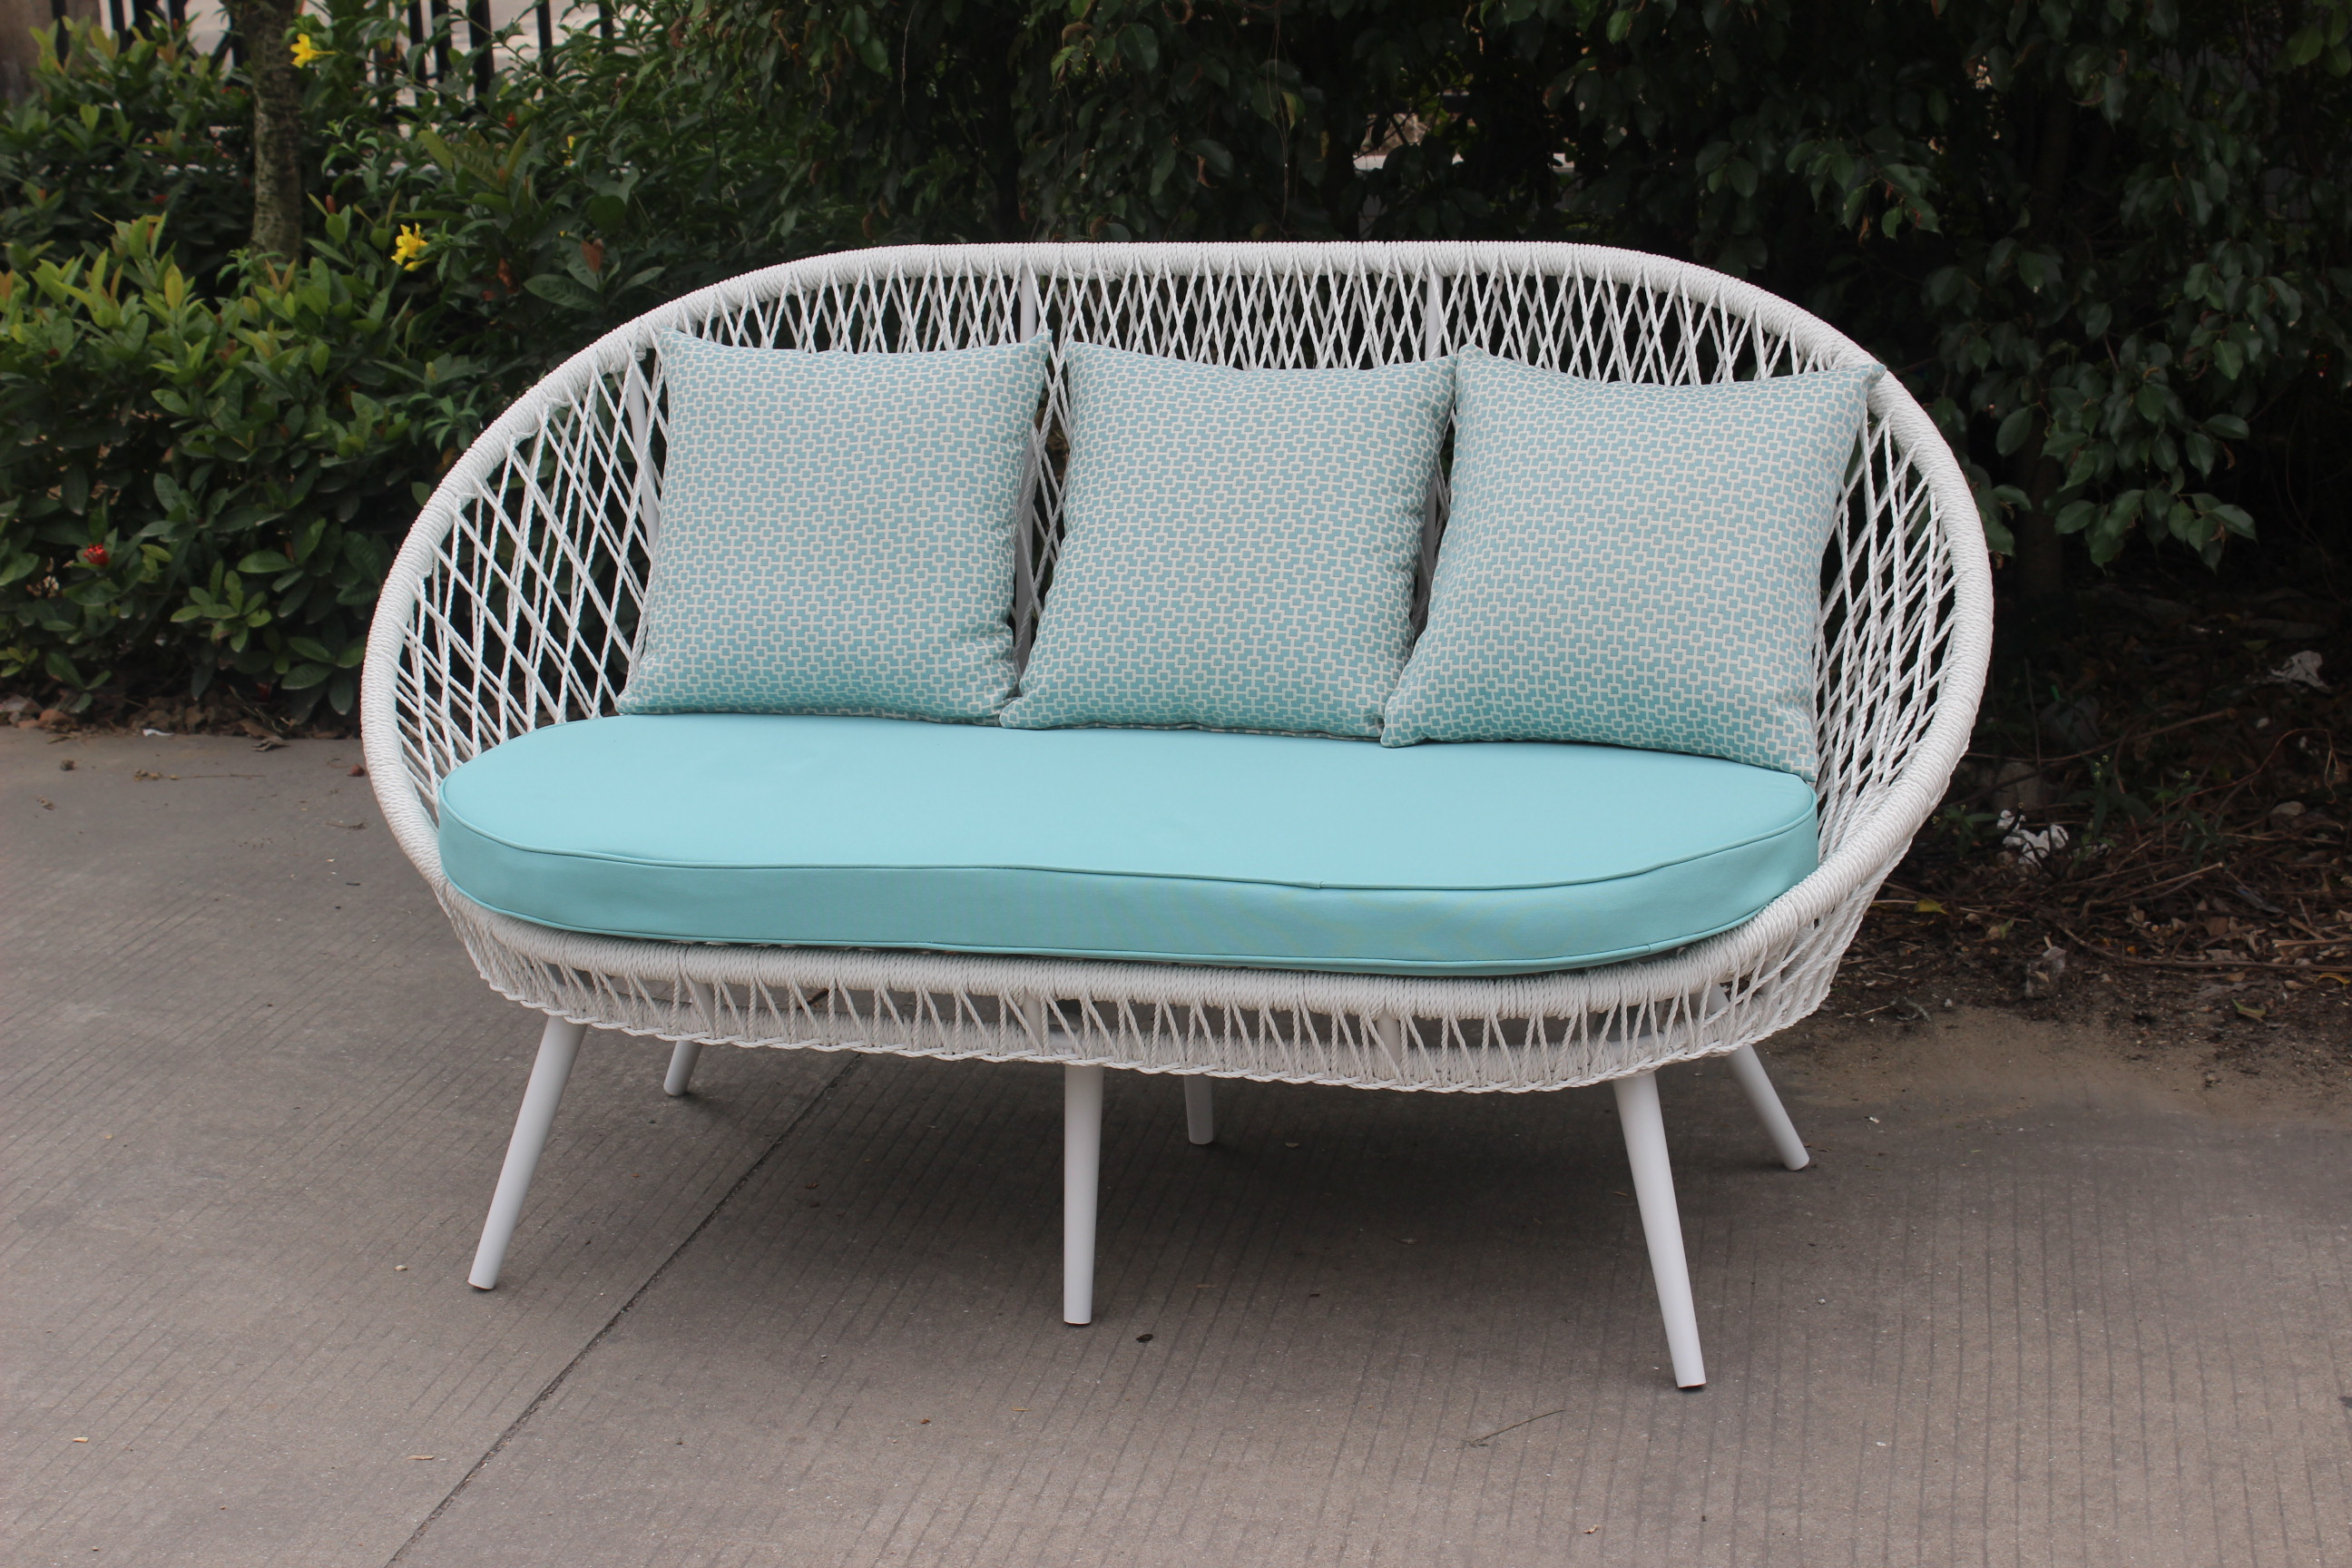 White patio terrace rope sofa furniture set